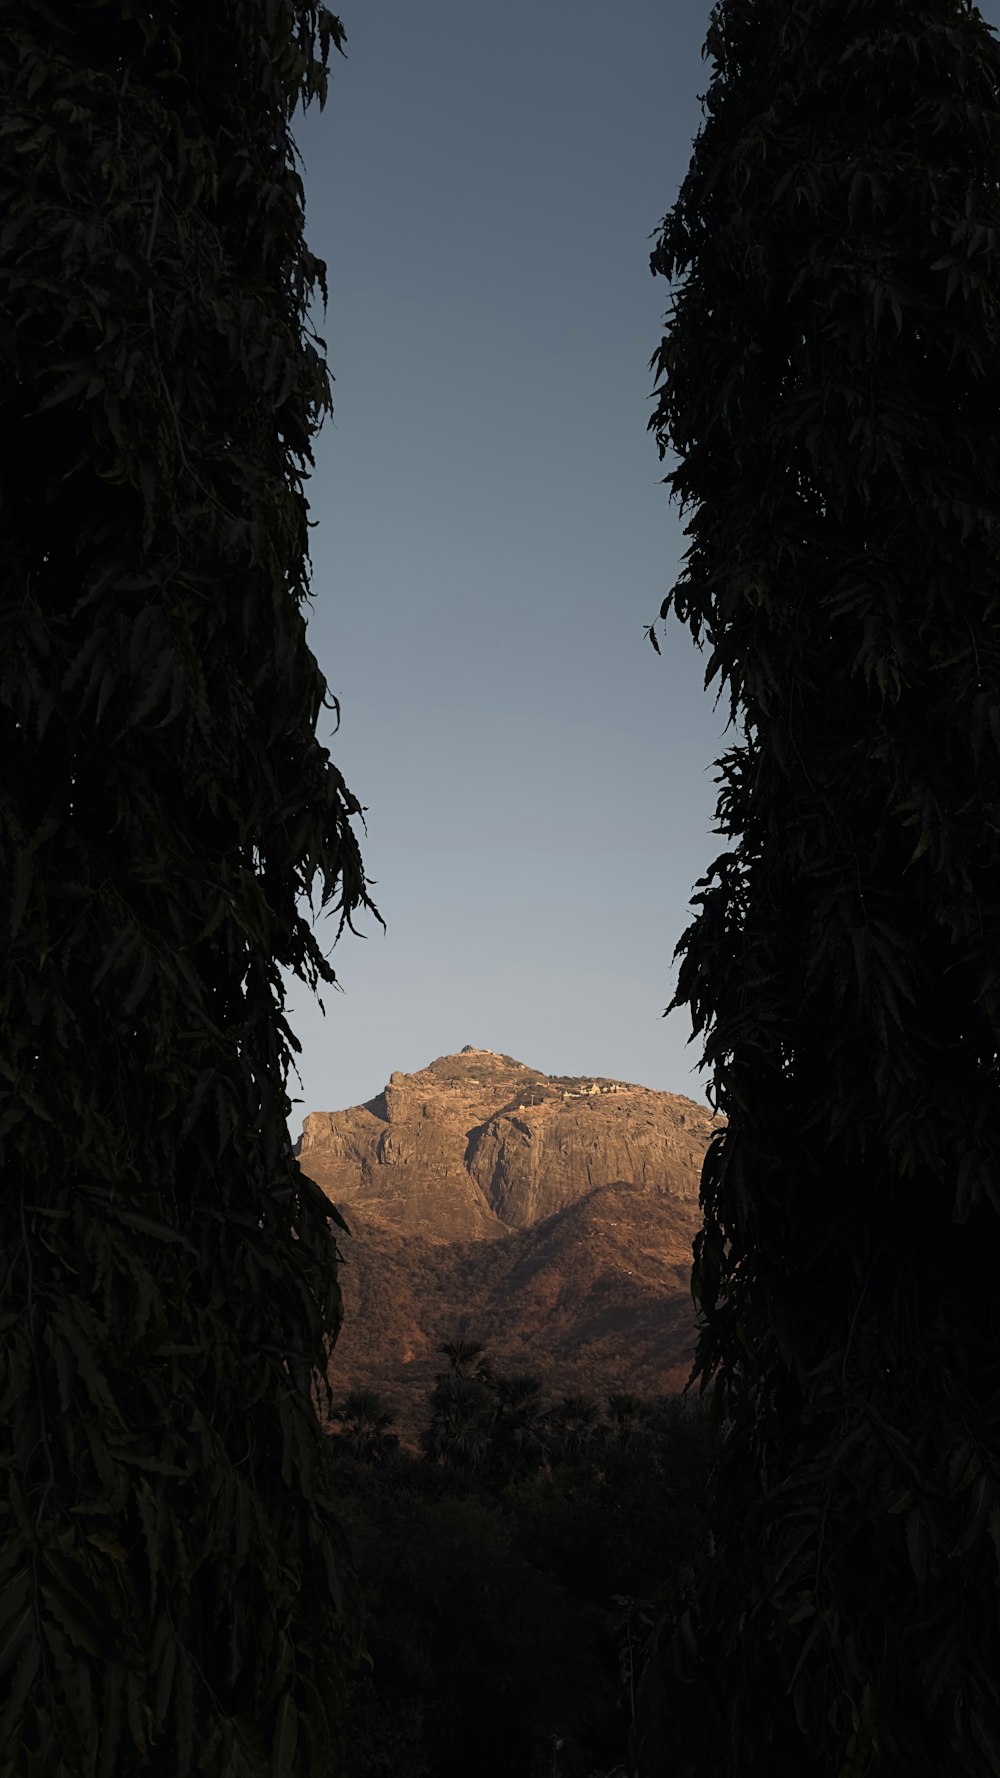 a view of a mountain through some trees